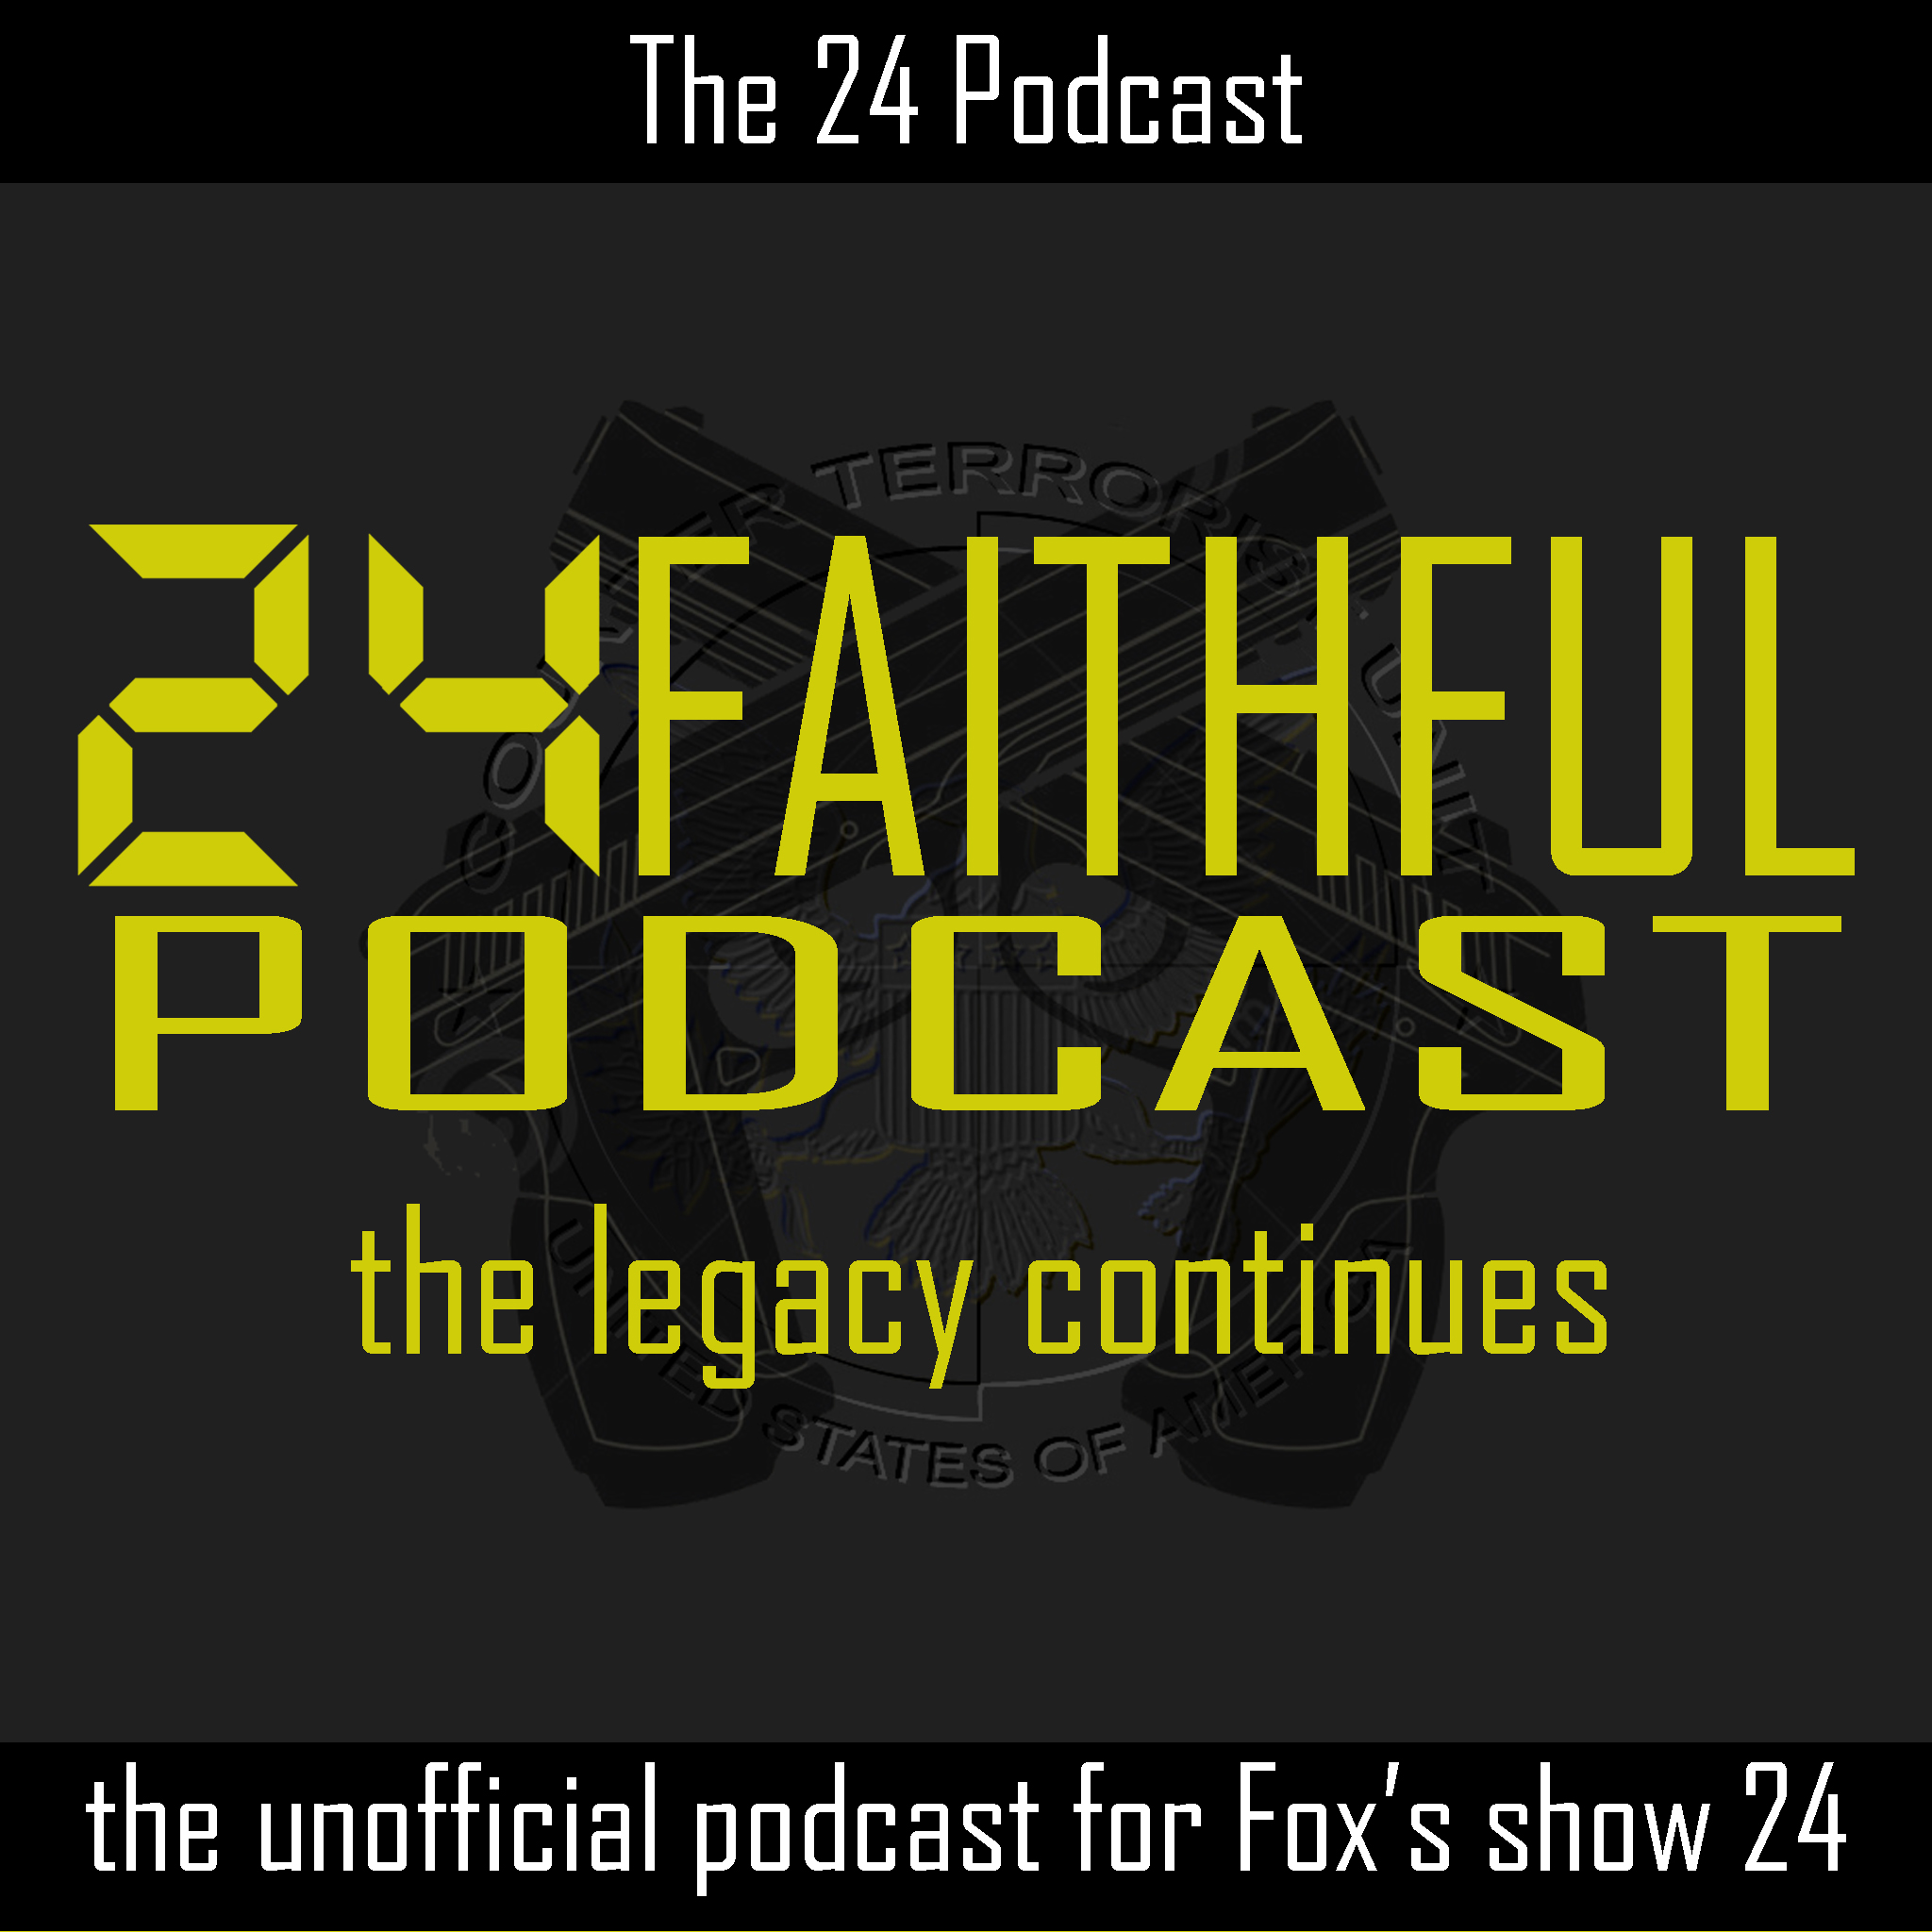 Artwork for podcast 24 Faithful Podcast